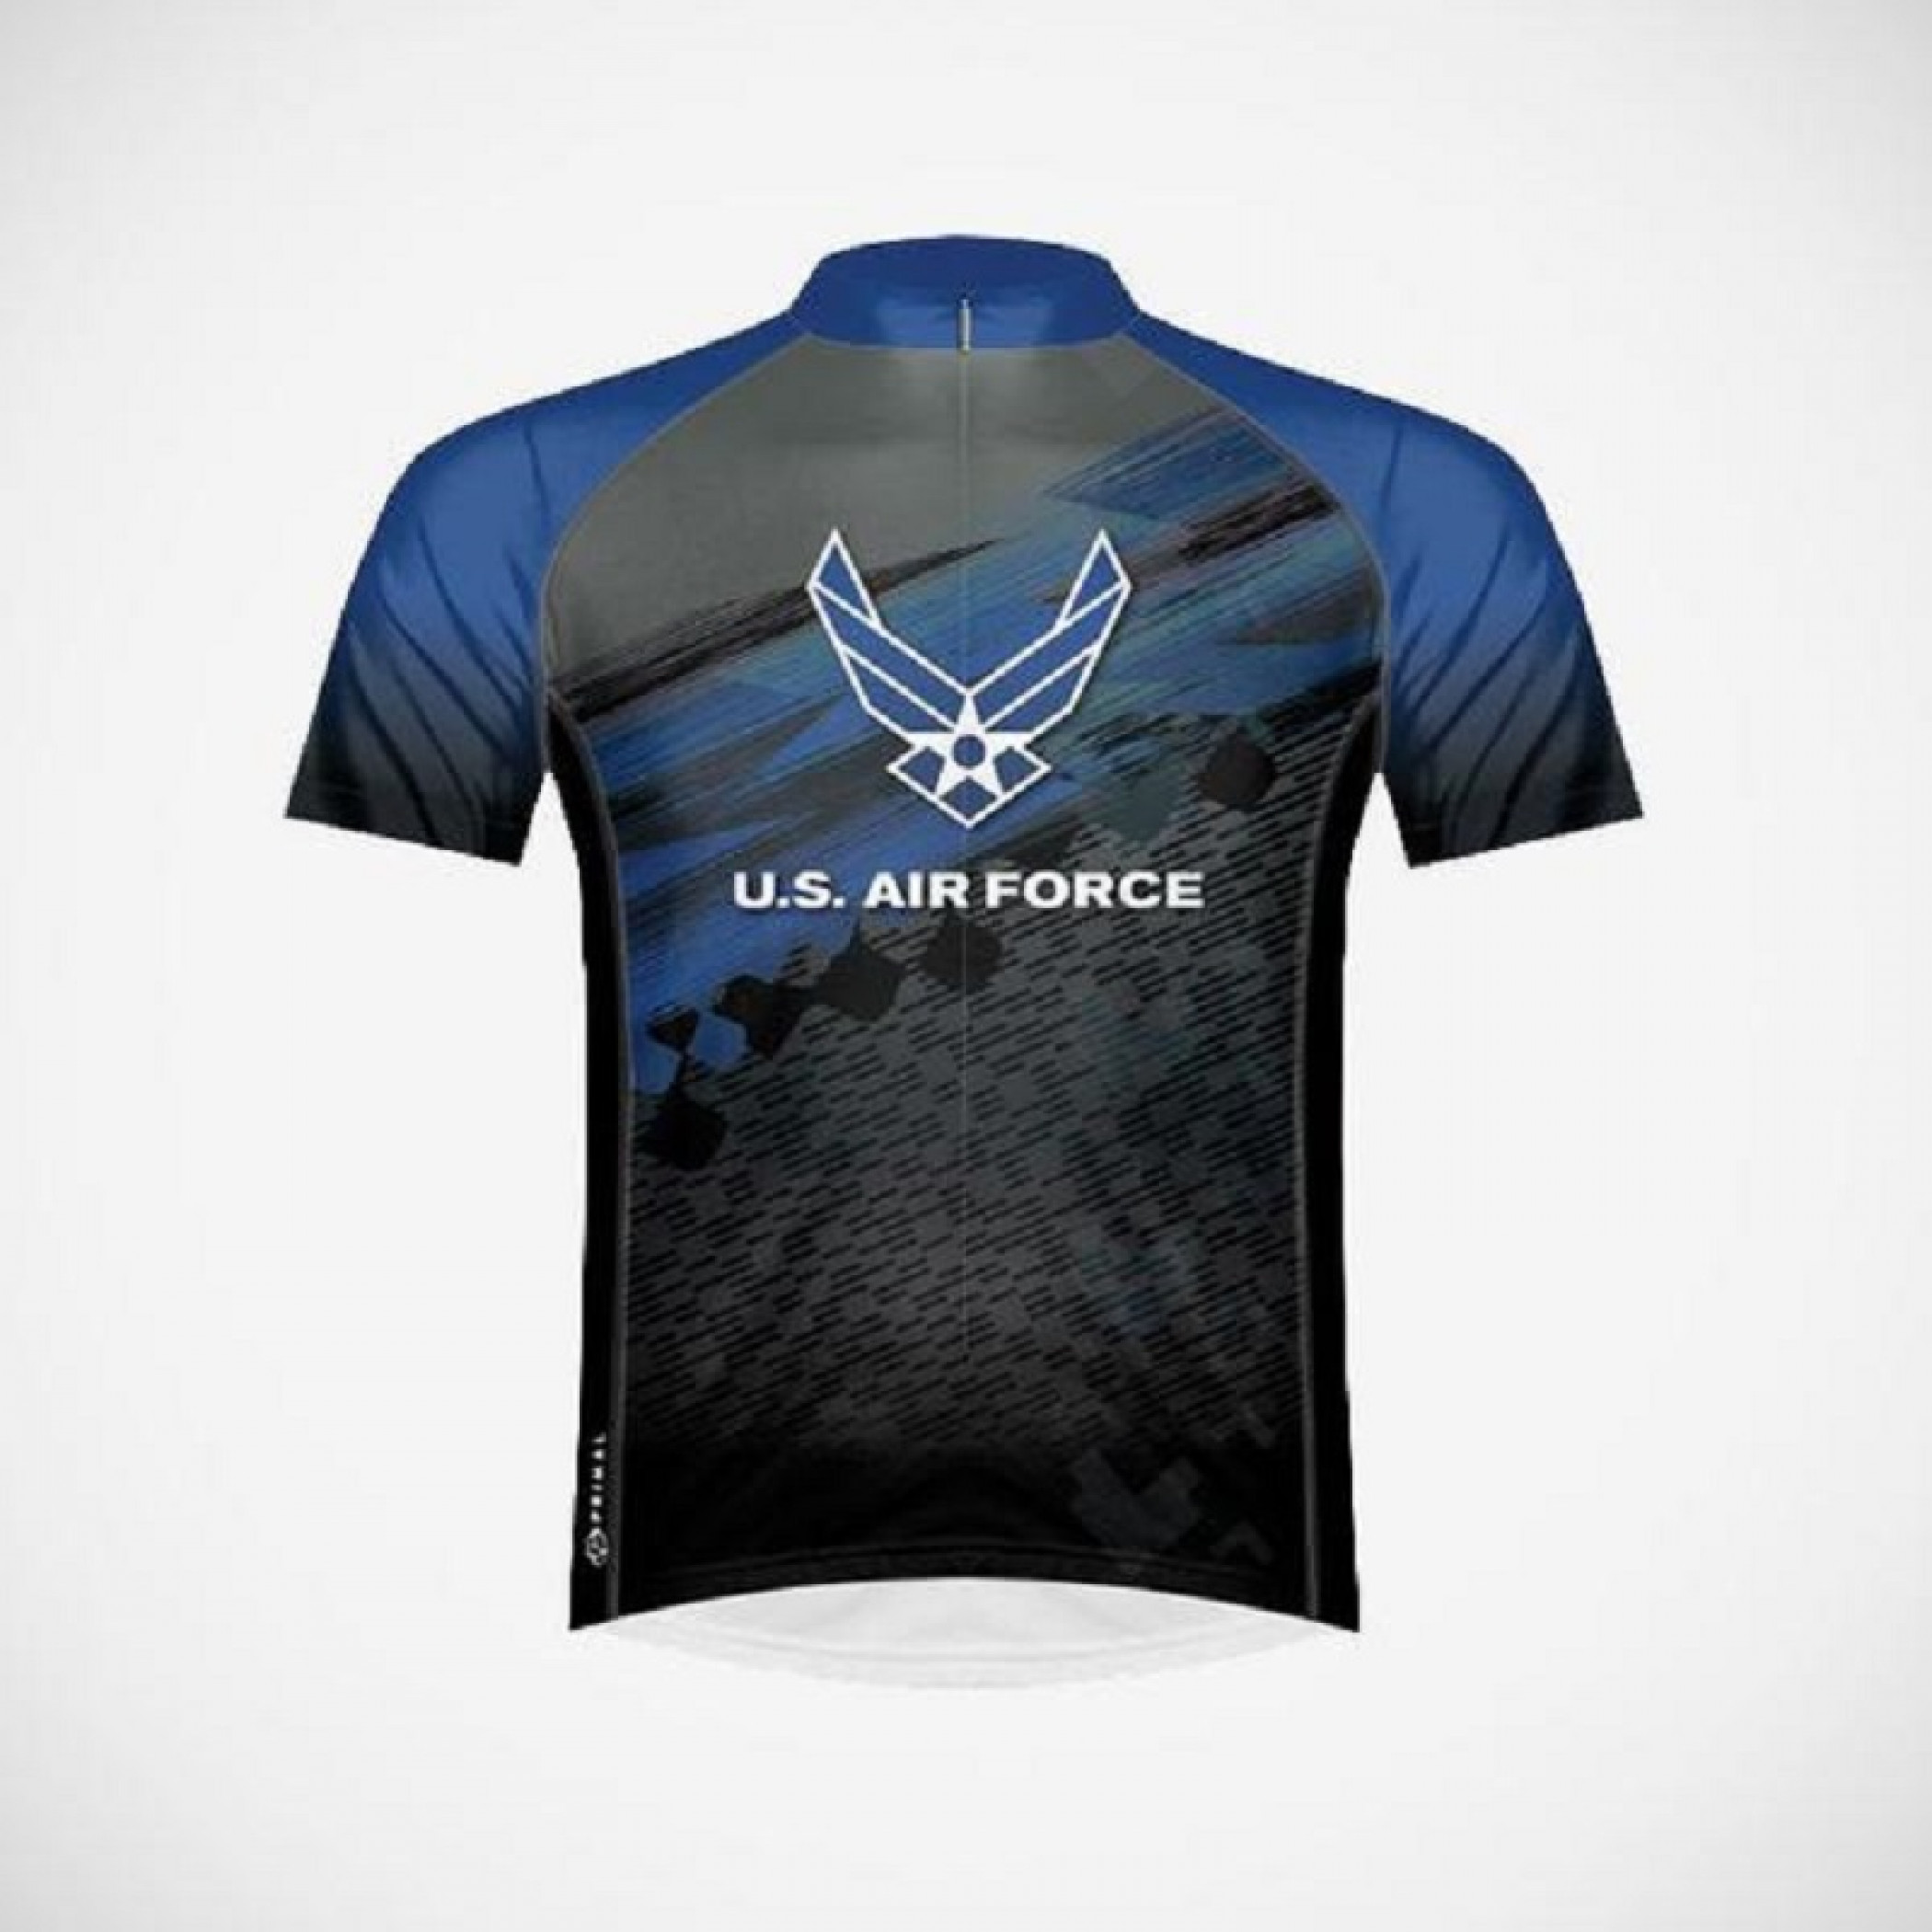 US Air Force Flight Men's Cycling Jersey